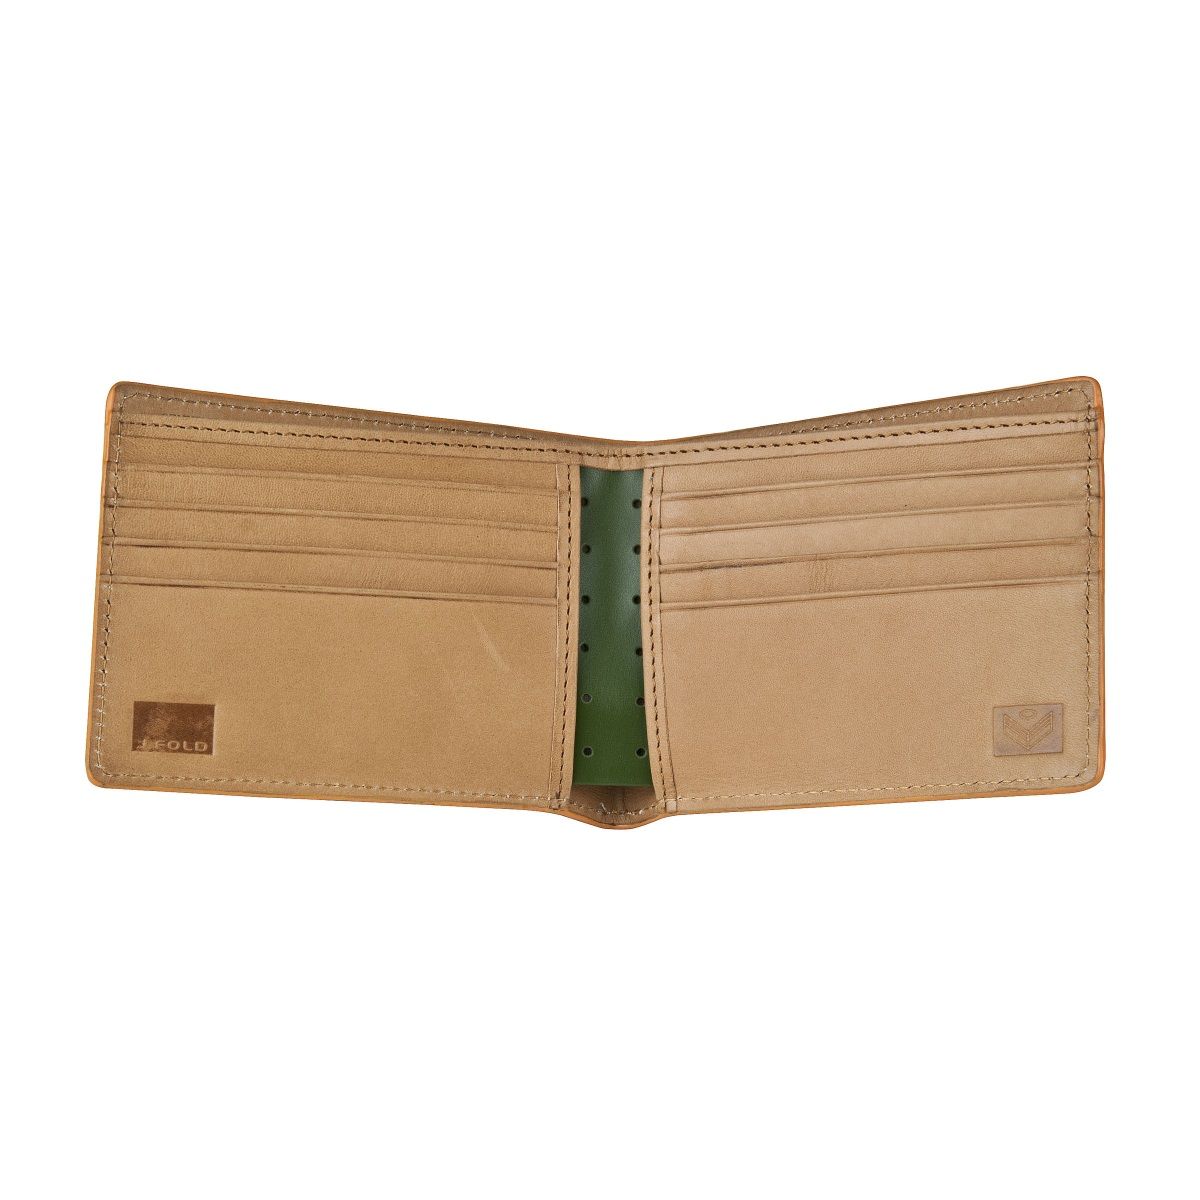 J.FOLD Loungemaster Leather Wallet  - Green